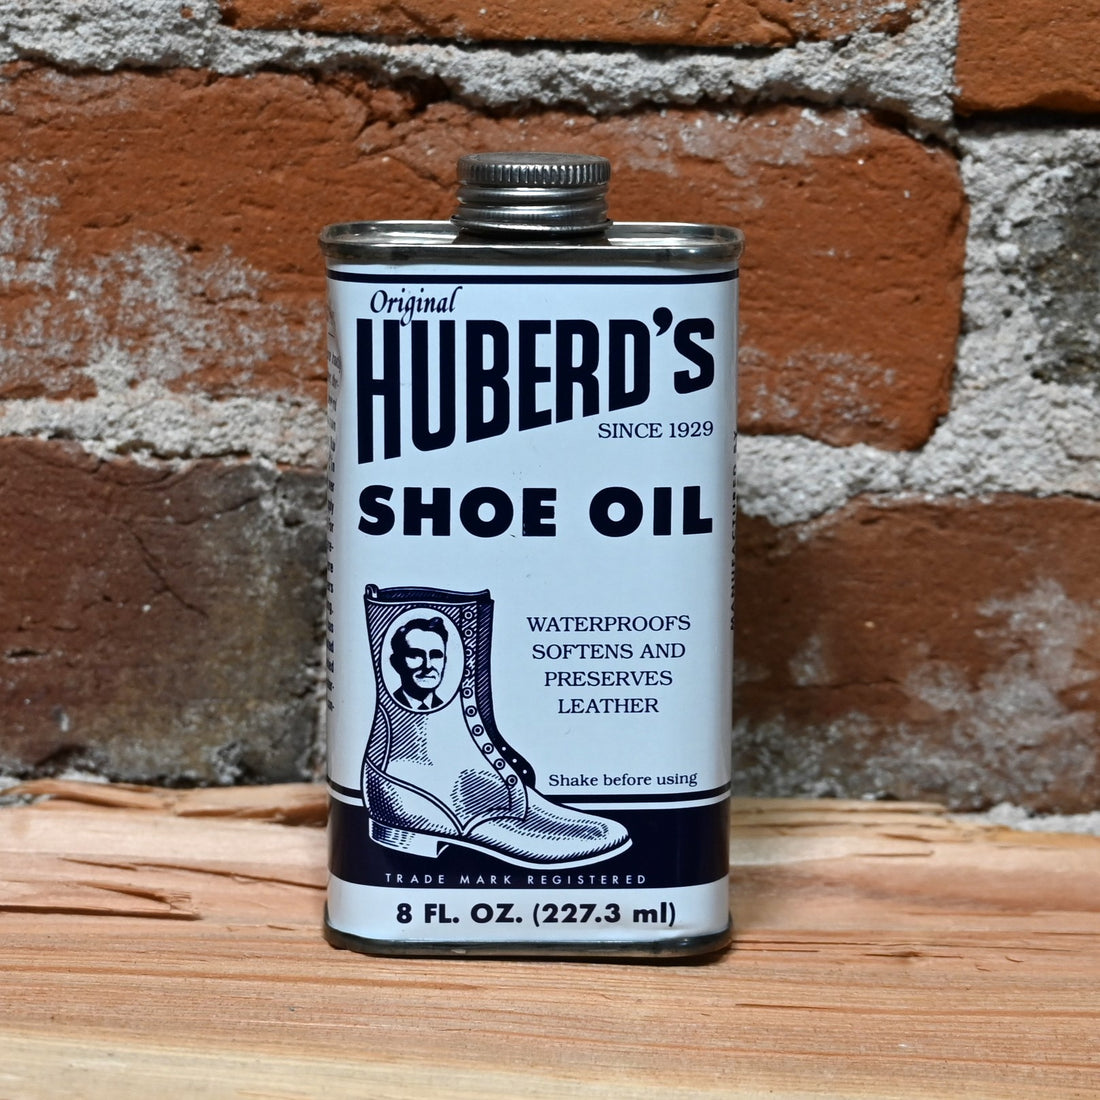 Huberd Shoe Oil 8 Oz view of shoe oil